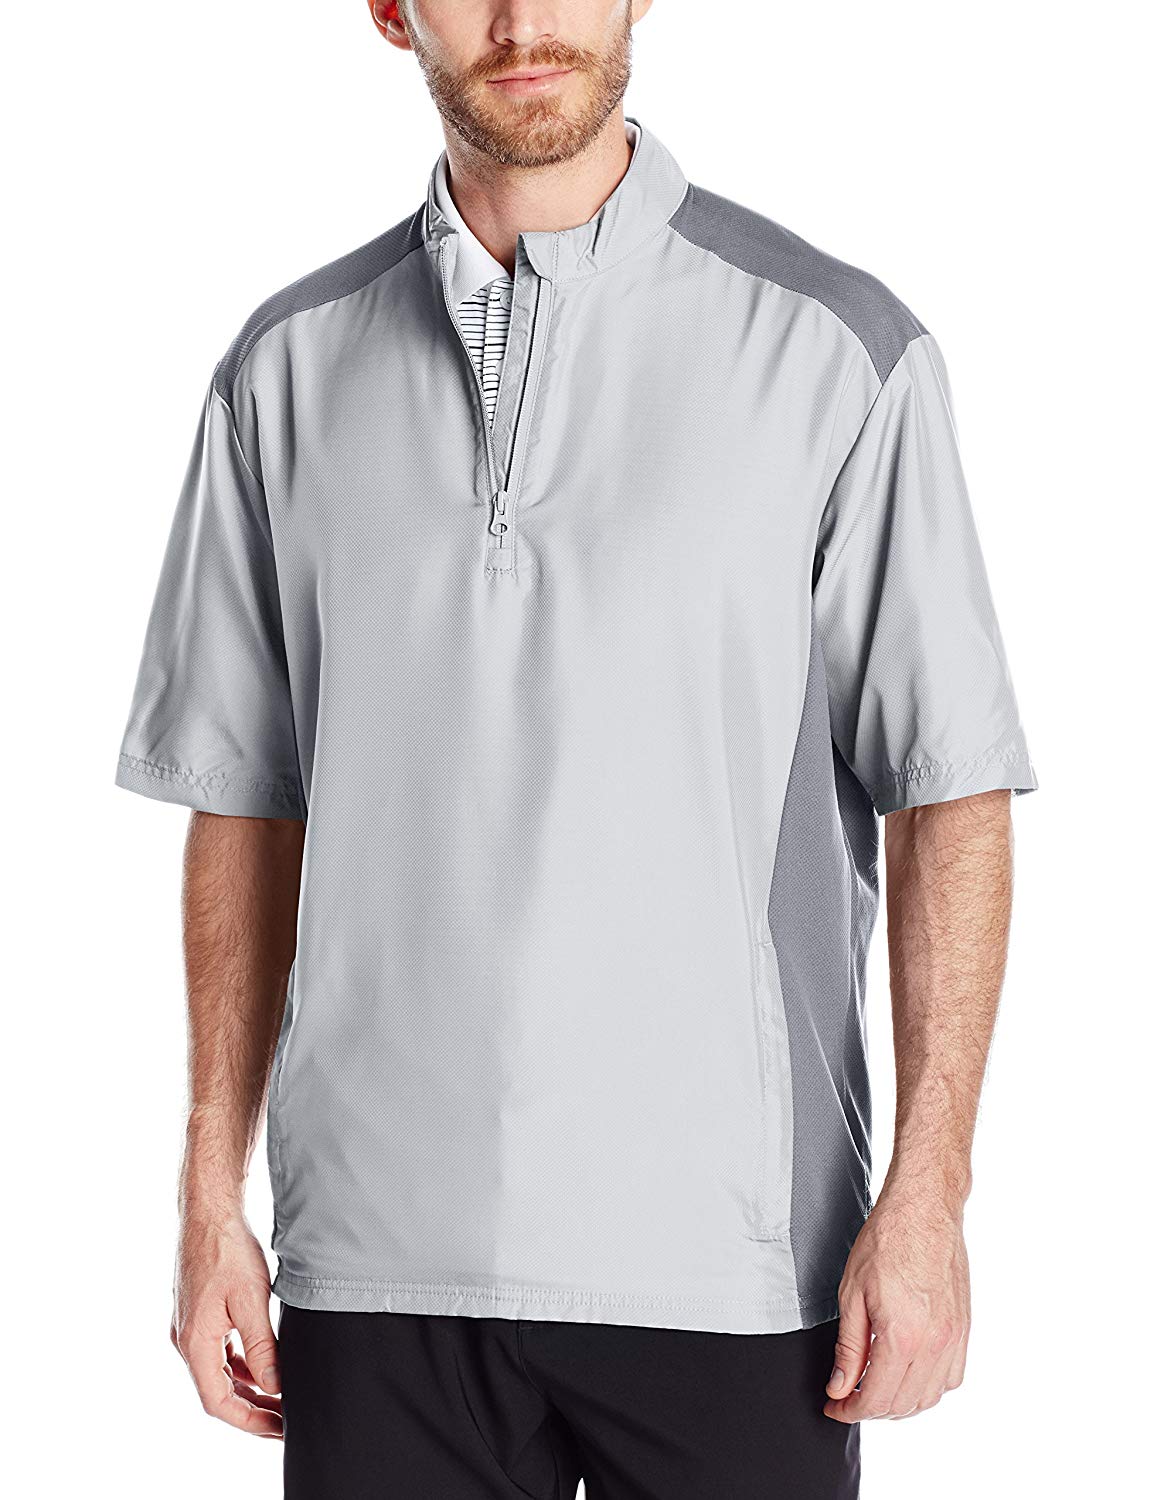 Adidas Mens Club Wind Short Sleeve Golf Jackets